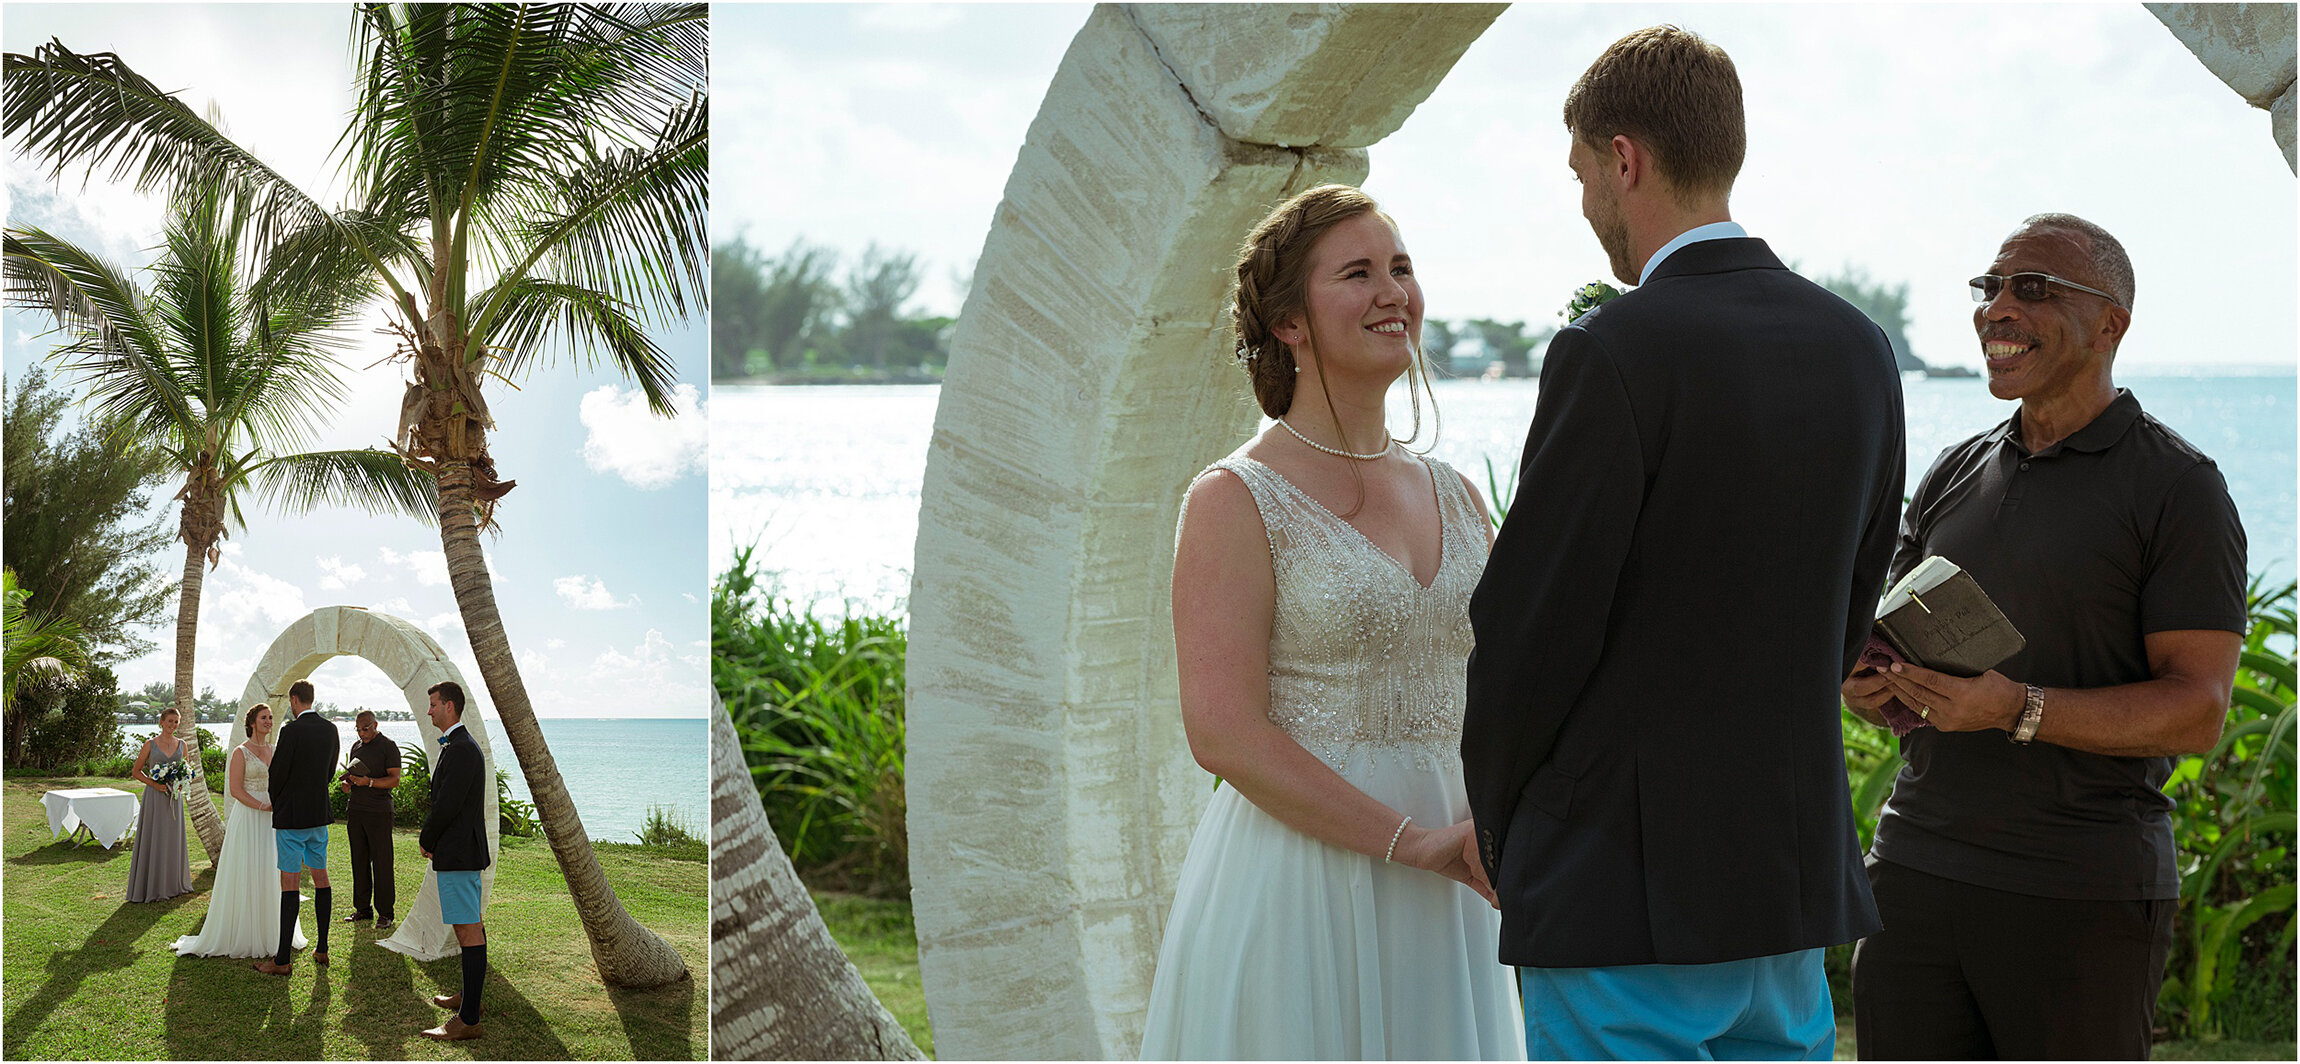 ©FianderFoto_Bermuda Wedding_Cambridge Beaches_047.jpg